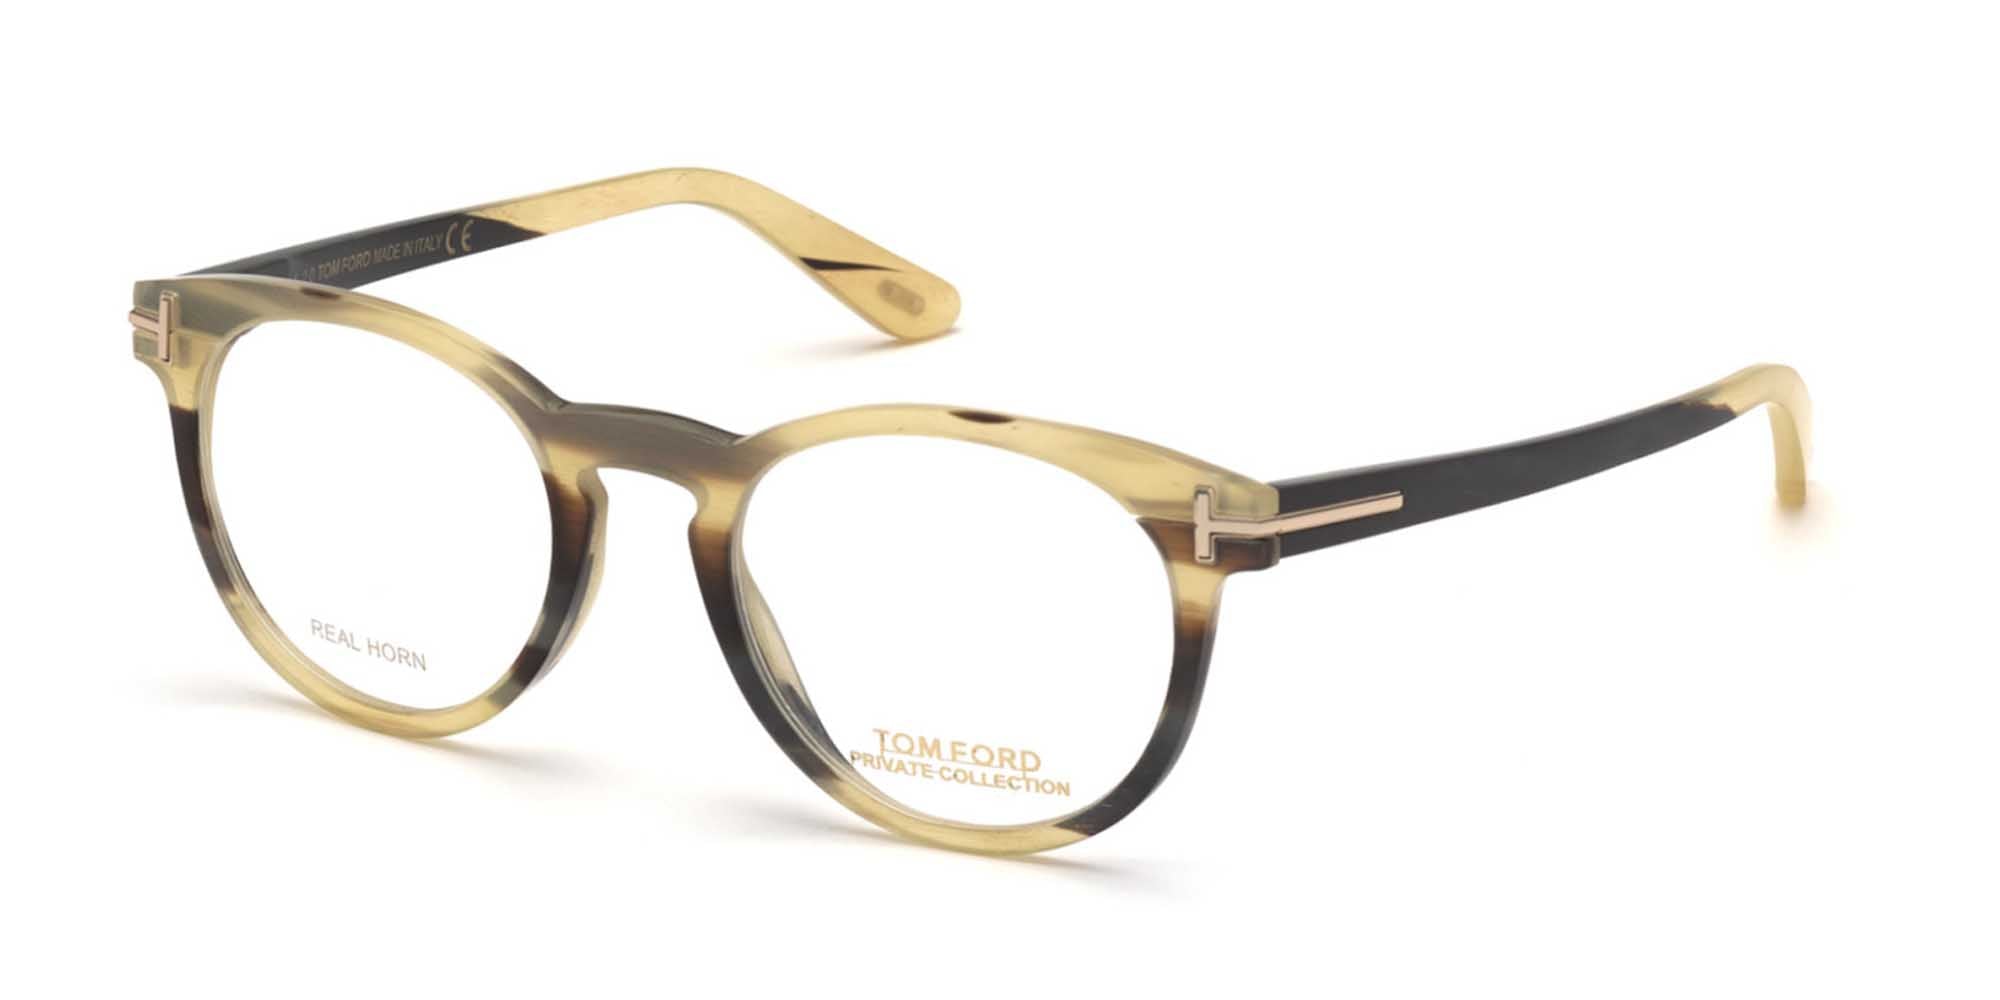 Tom Ford Private TF5721-P Round Glasses | Fashion Eyewear UK